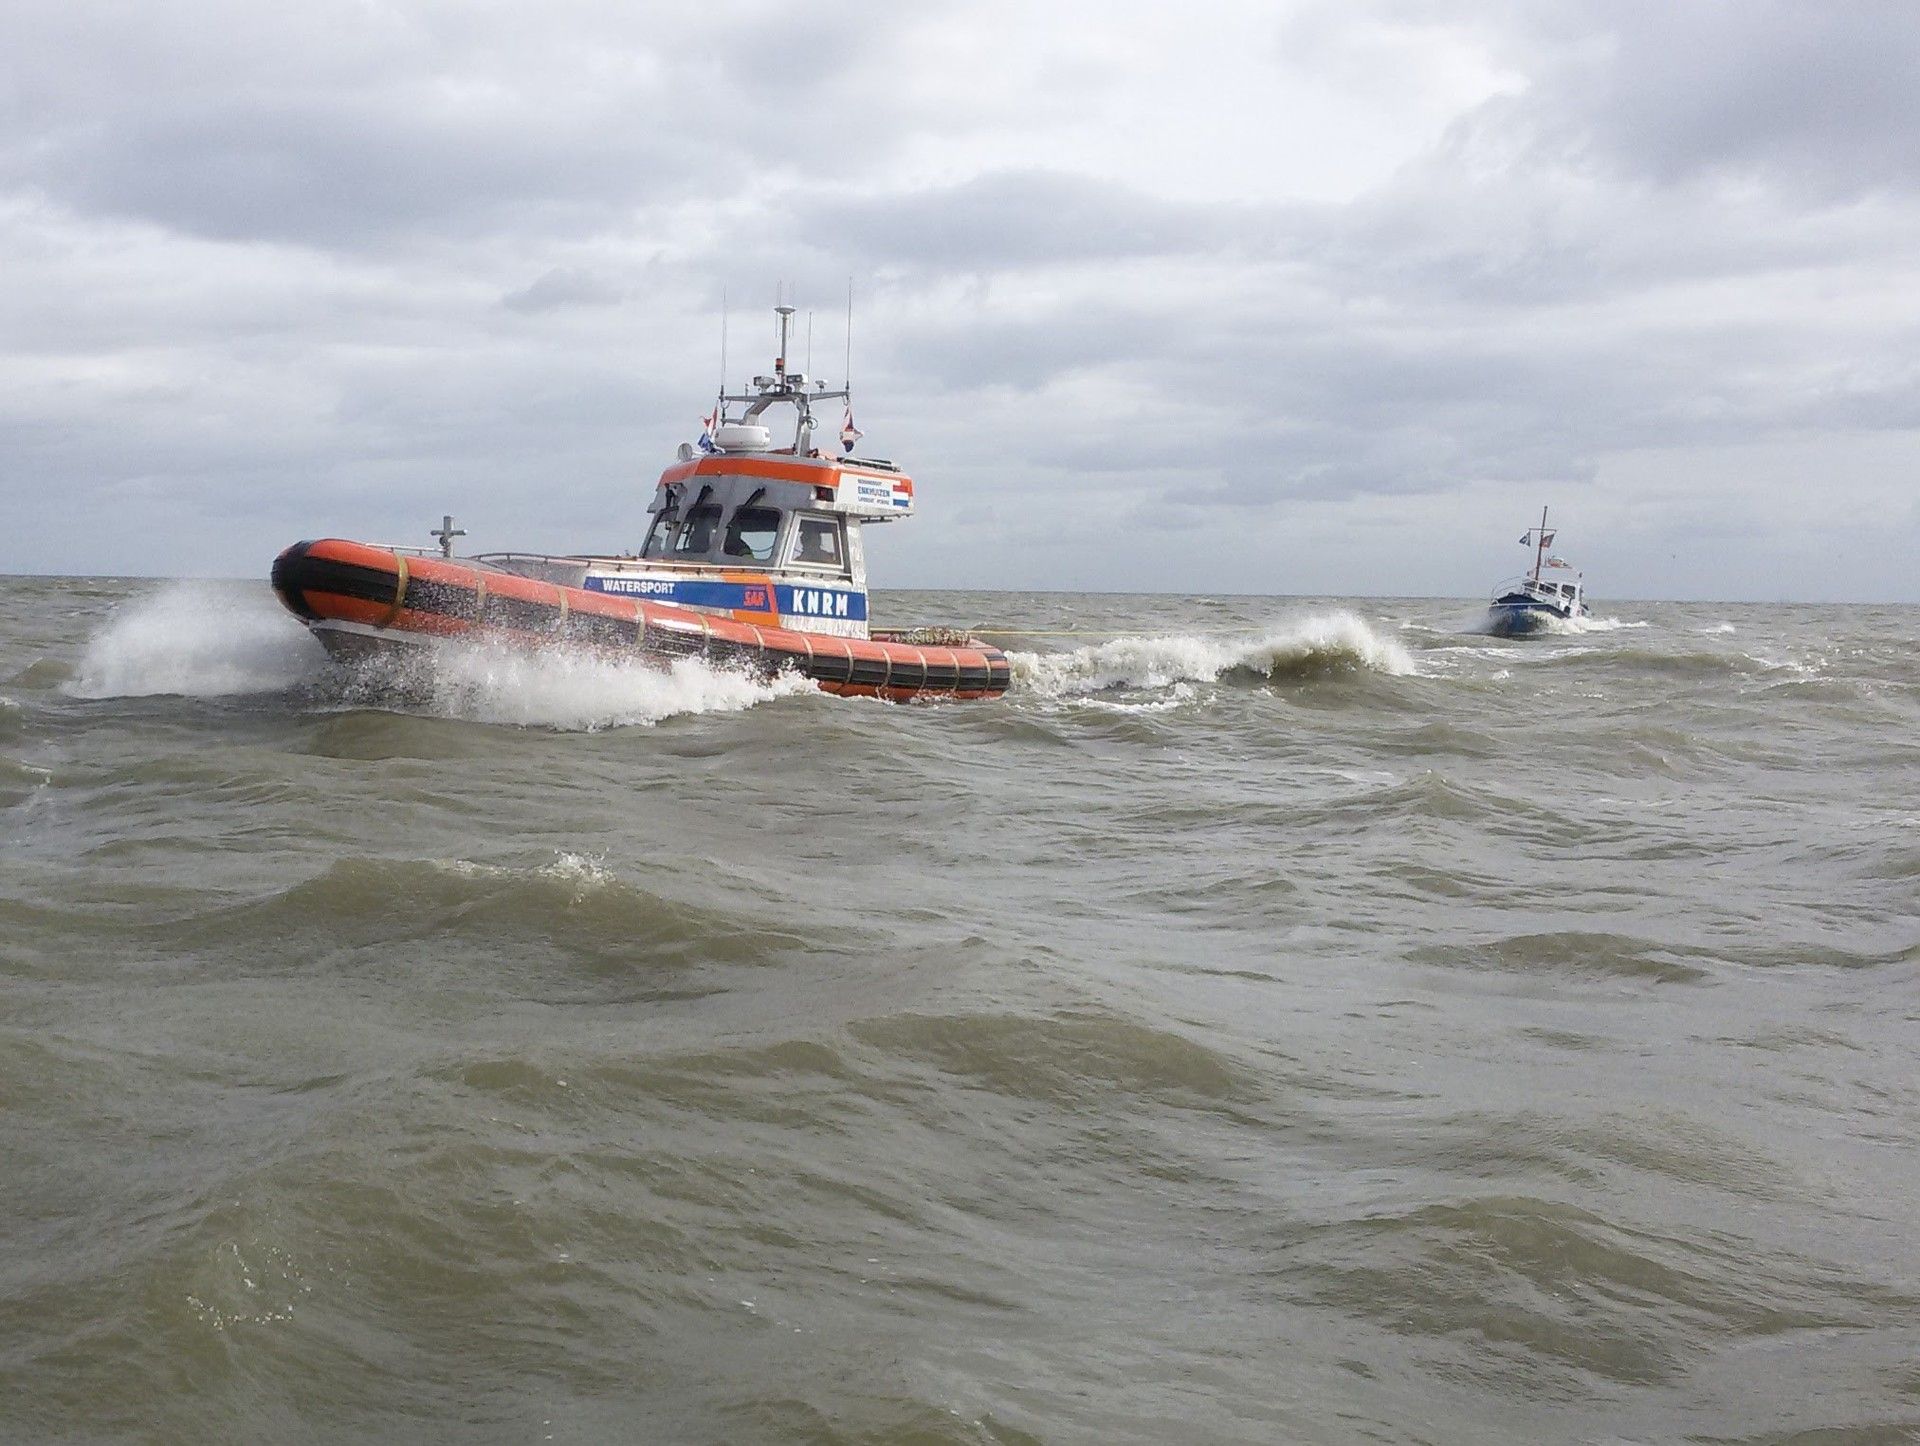 Reddingboot Watersport heeft vormalig reddingboot Prins Bernard op sleep 